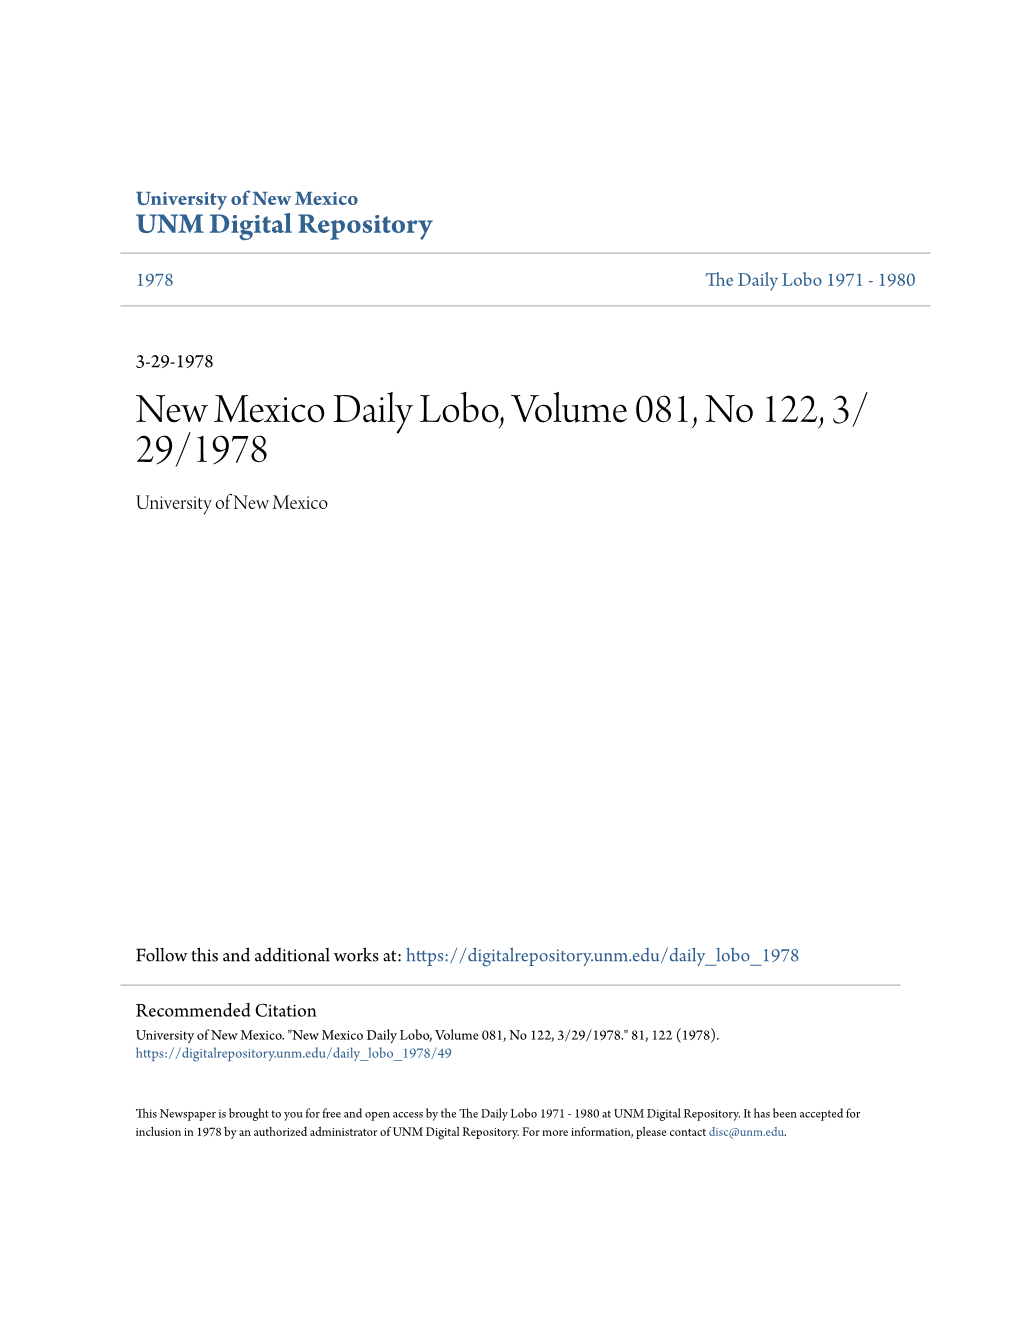 New Mexico Daily Lobo, Volume 081, No 122, 3/29/1978." 81, 122 (1978)